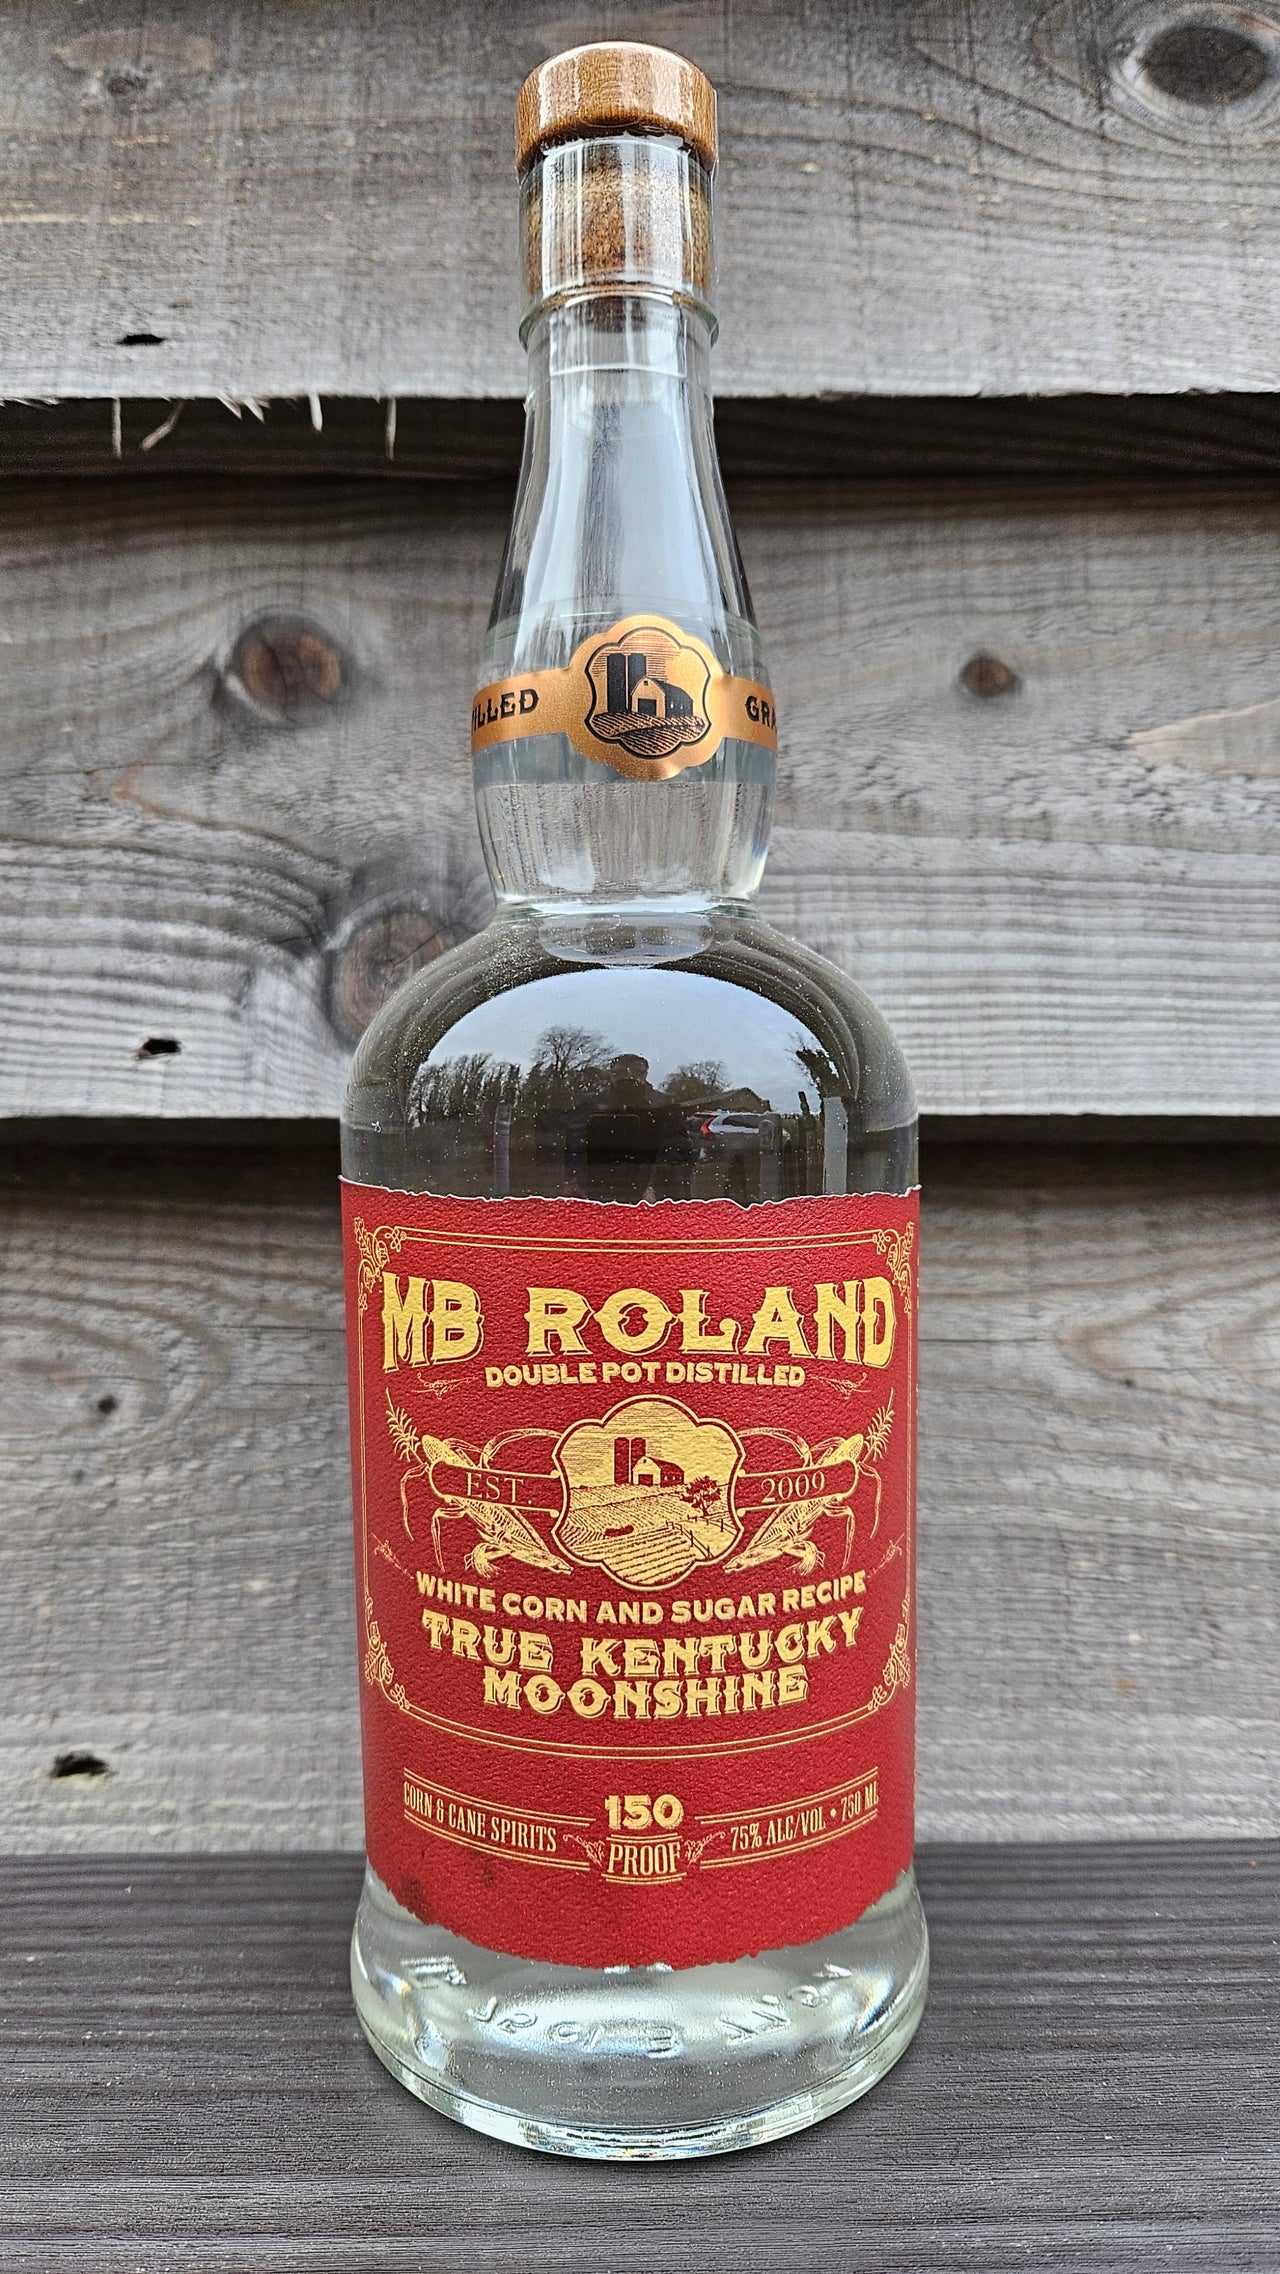 MB Roland True Kentucky Moonshine 150 Proof 75cl 75%